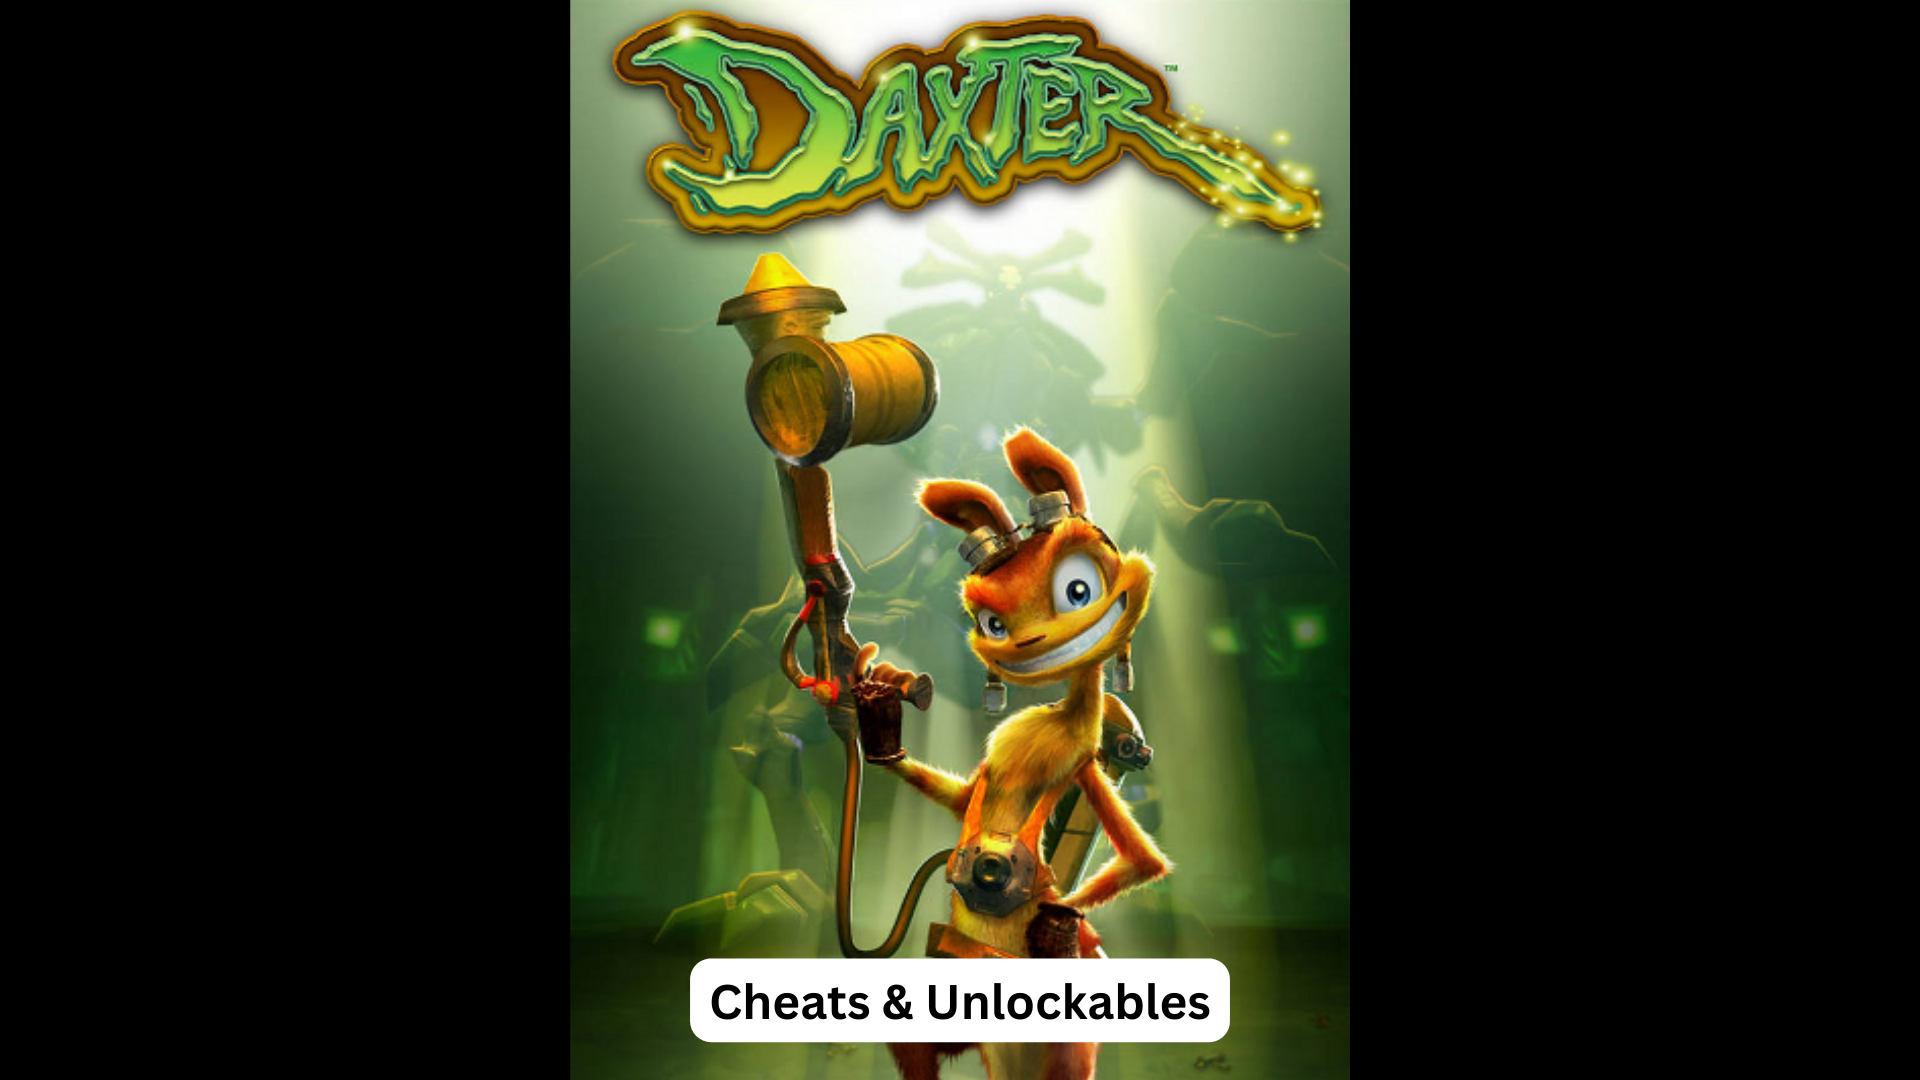 daxter cheats and unlockables